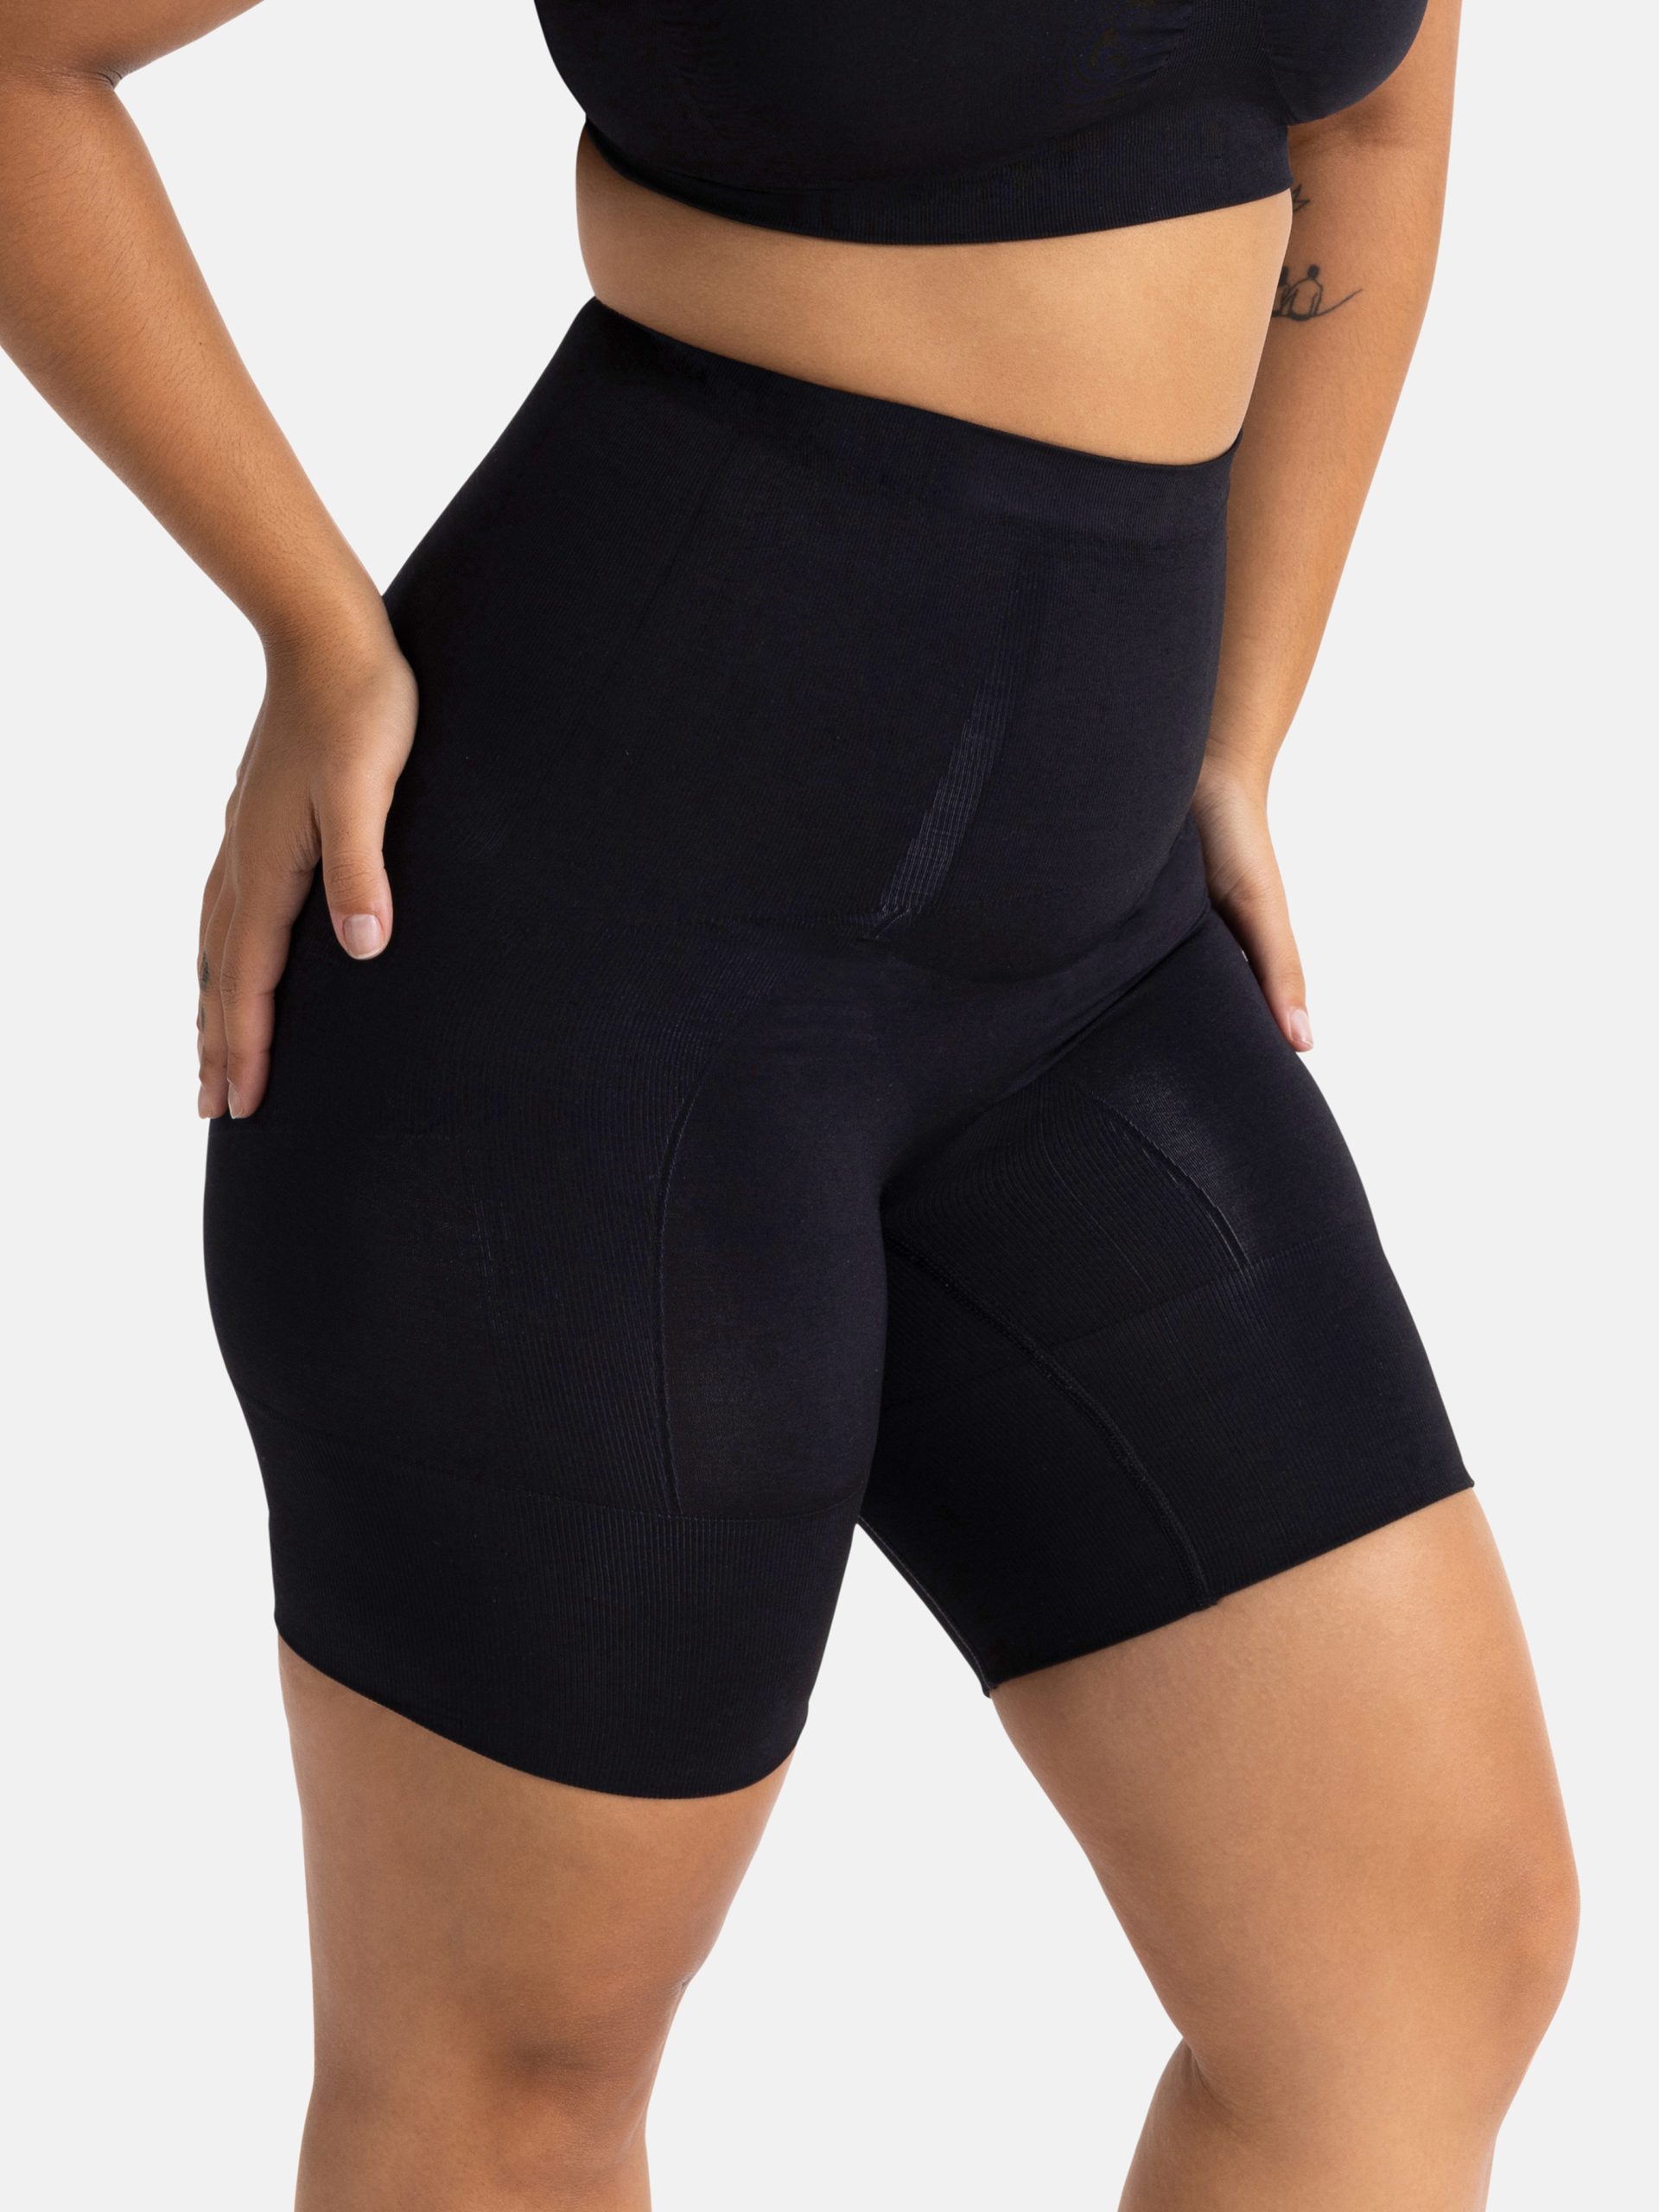 UltraHold Body Shaper Shorts & Bra Set - Seamless